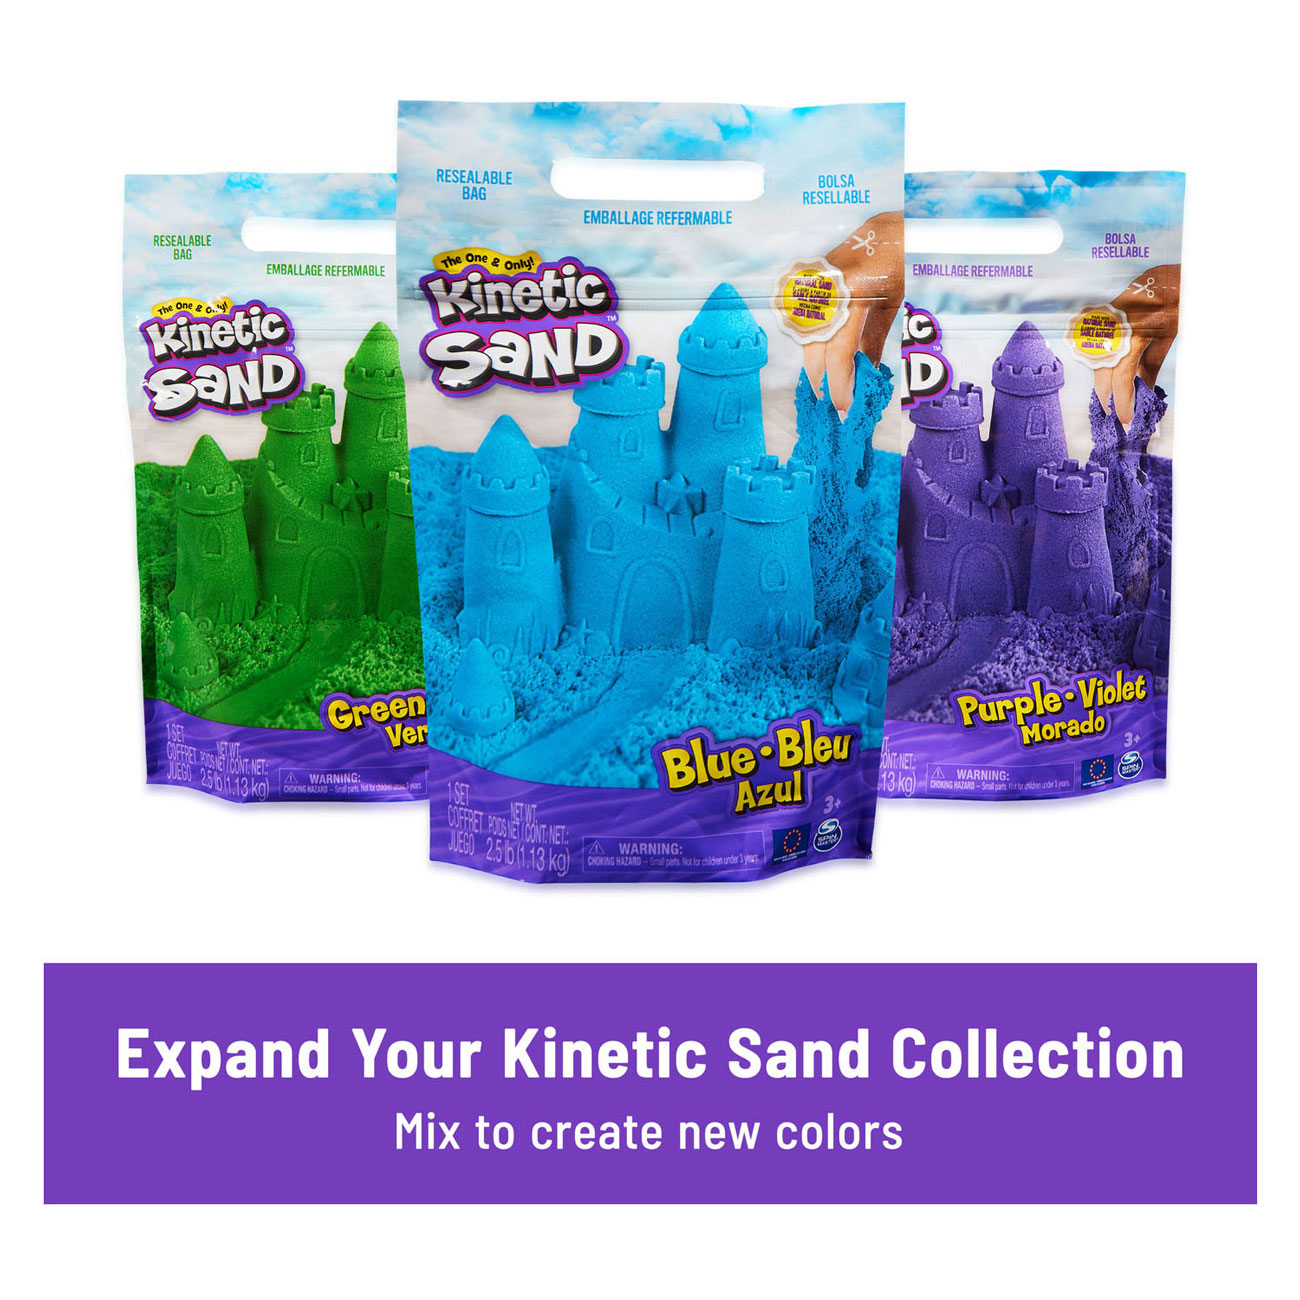 Kinetic Sand - Mold 'n Flow